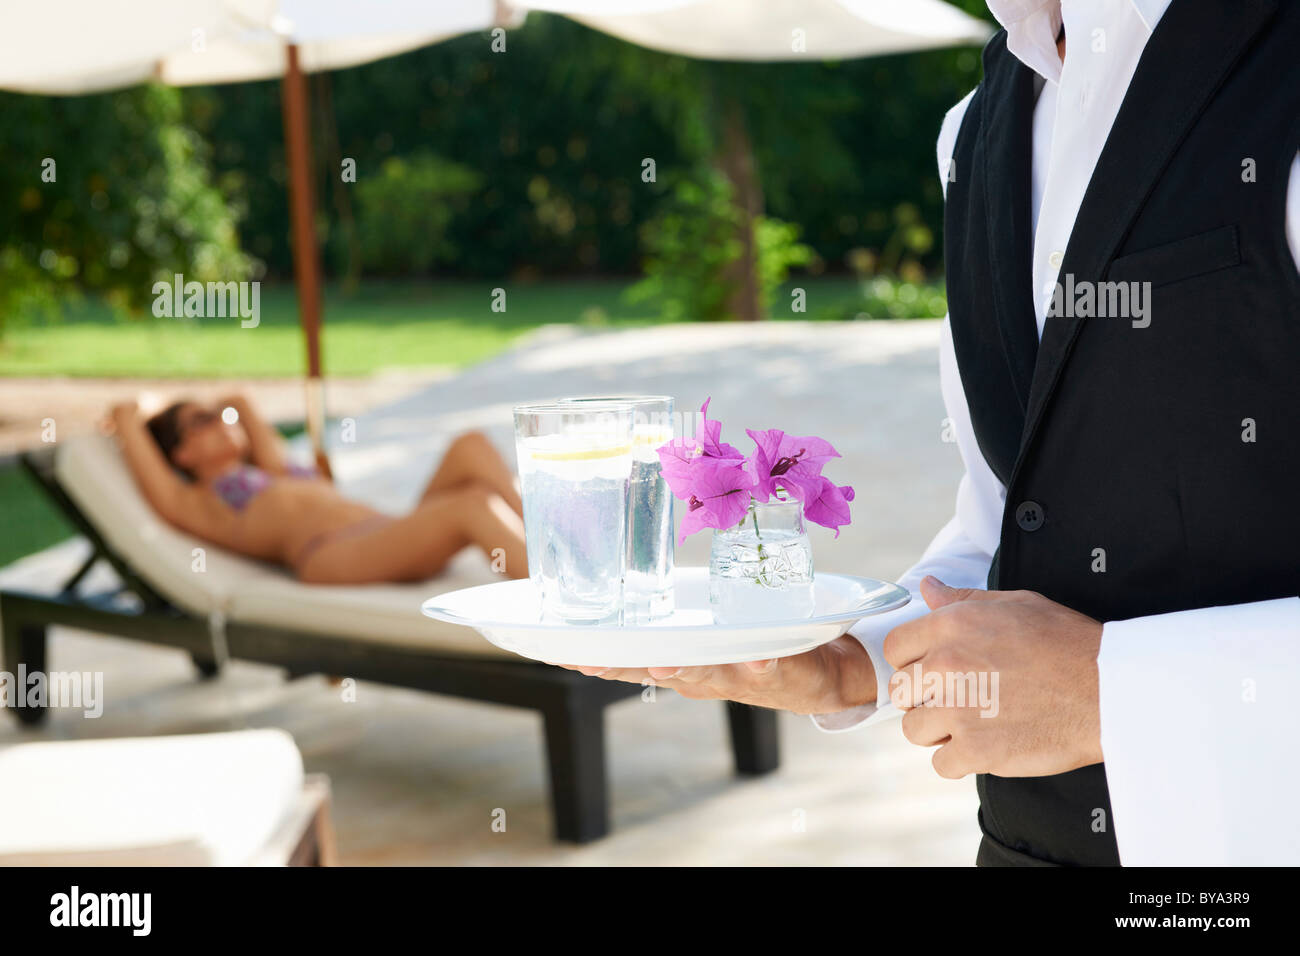 Hotel waiter holding tray by hotel pool Stock Photo